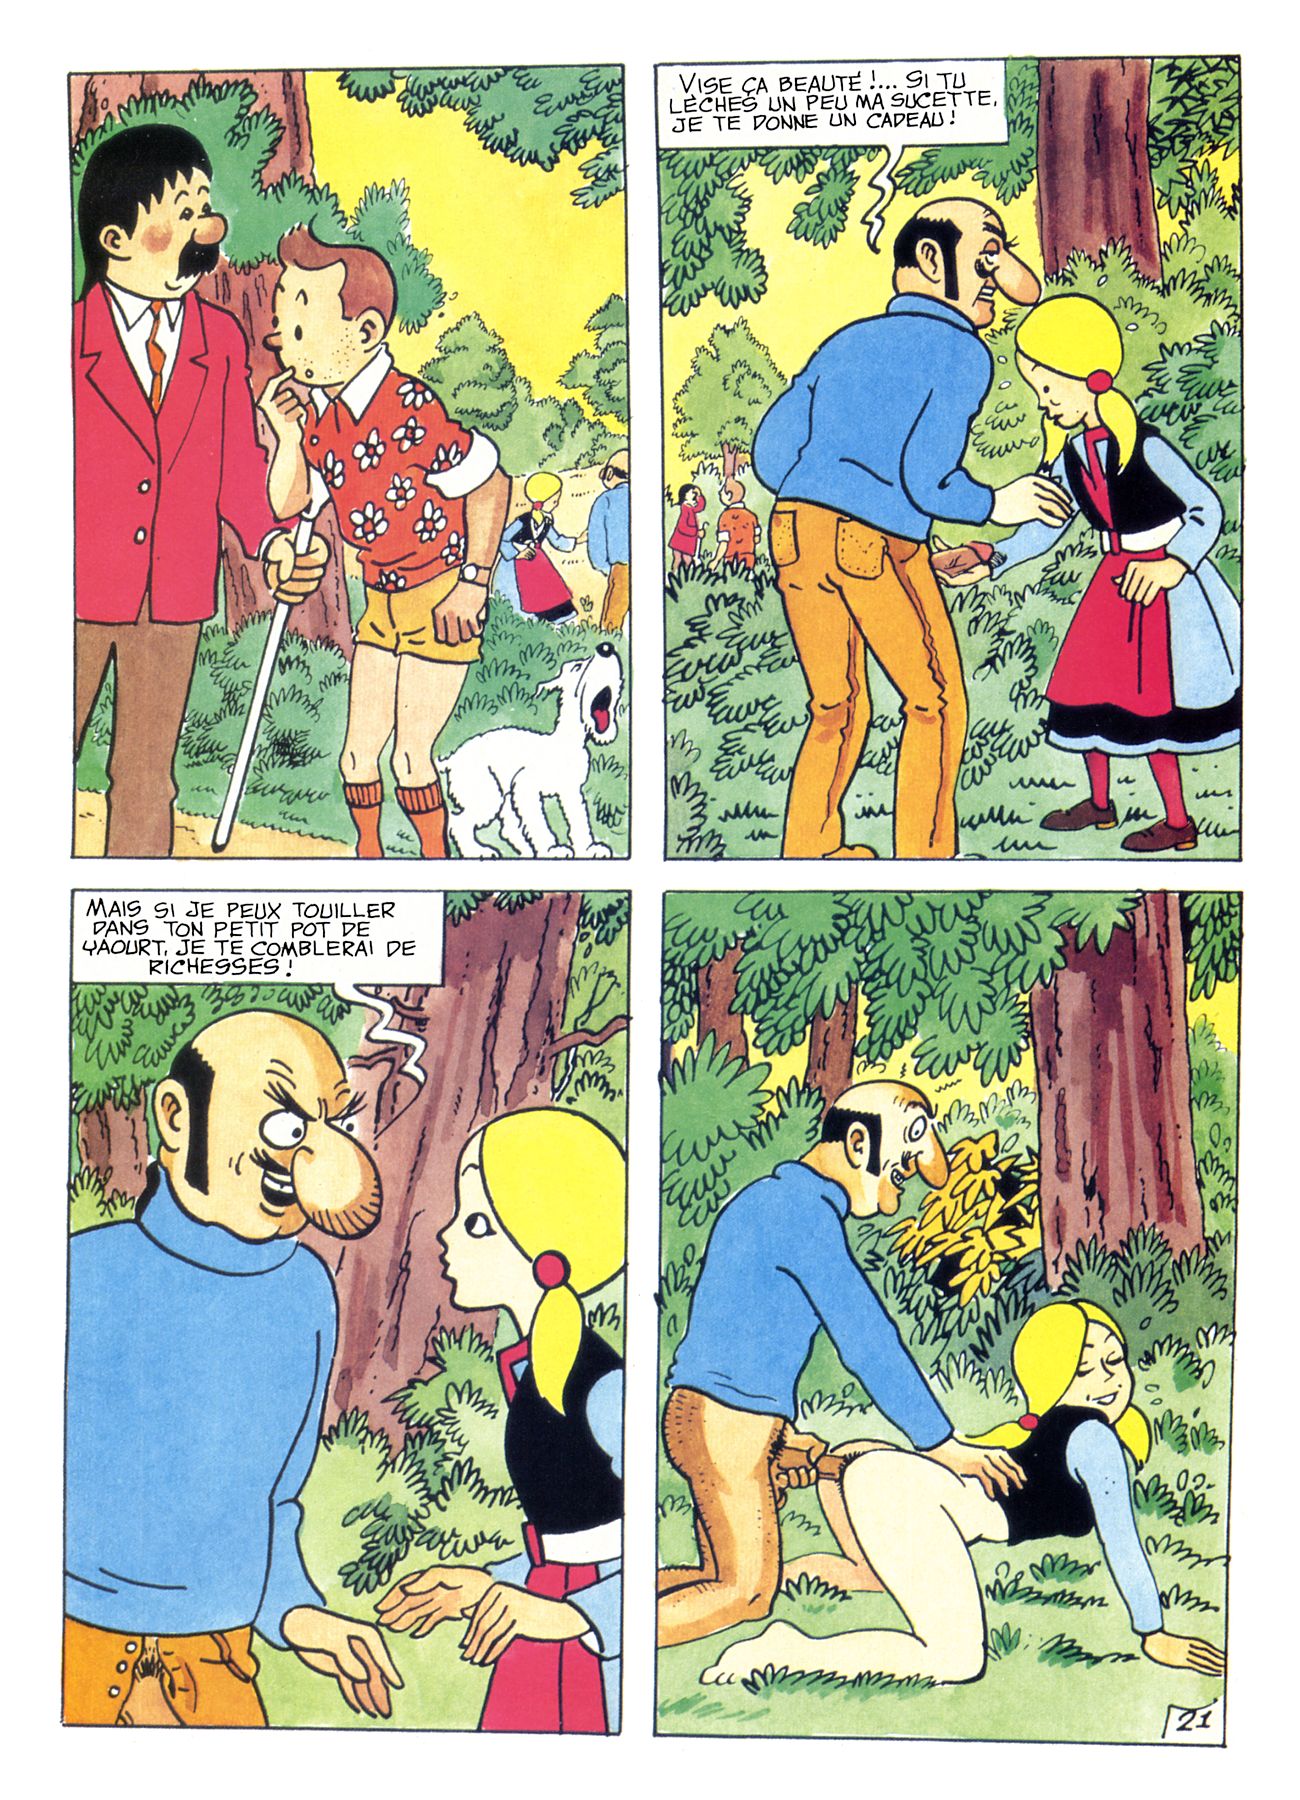 La-Vie-Sexuelle-De-Tintin-1992-All-64-pages-French-page21--Gotofap.tk--47931307.jpg